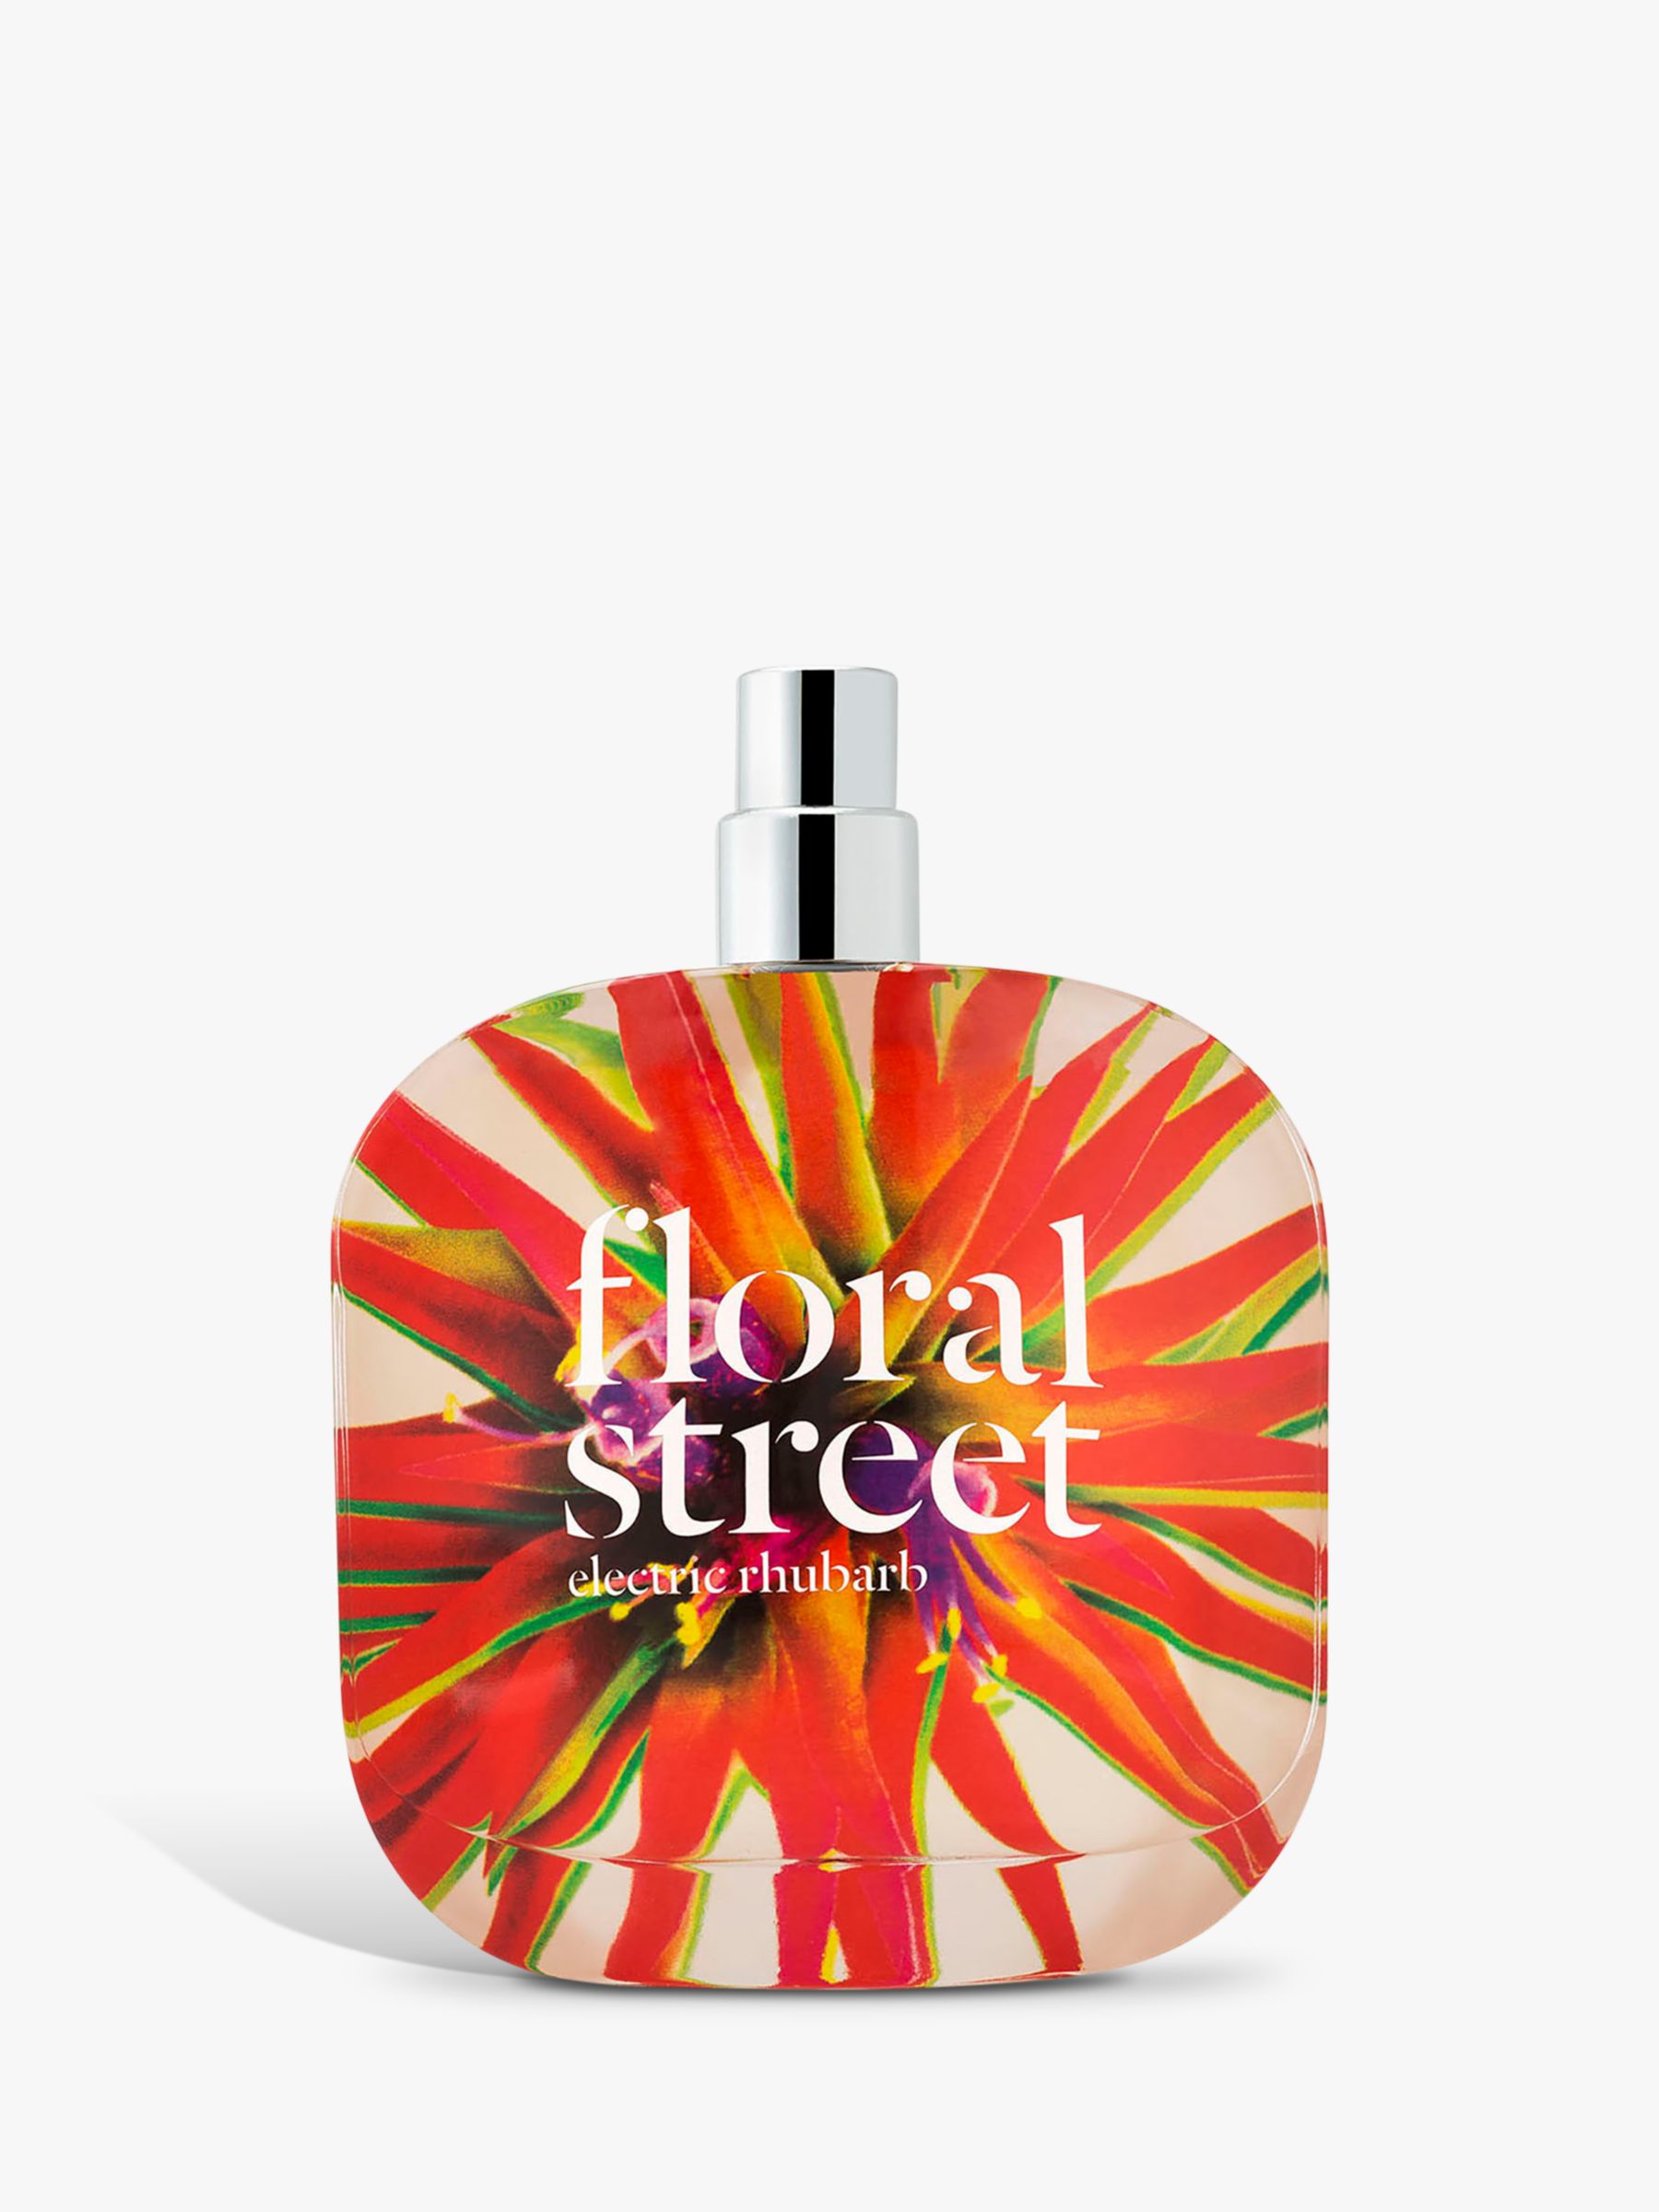 Floral Street Electric Rhubarb Eau de Parfum, 50ml at John Lewis & Partners